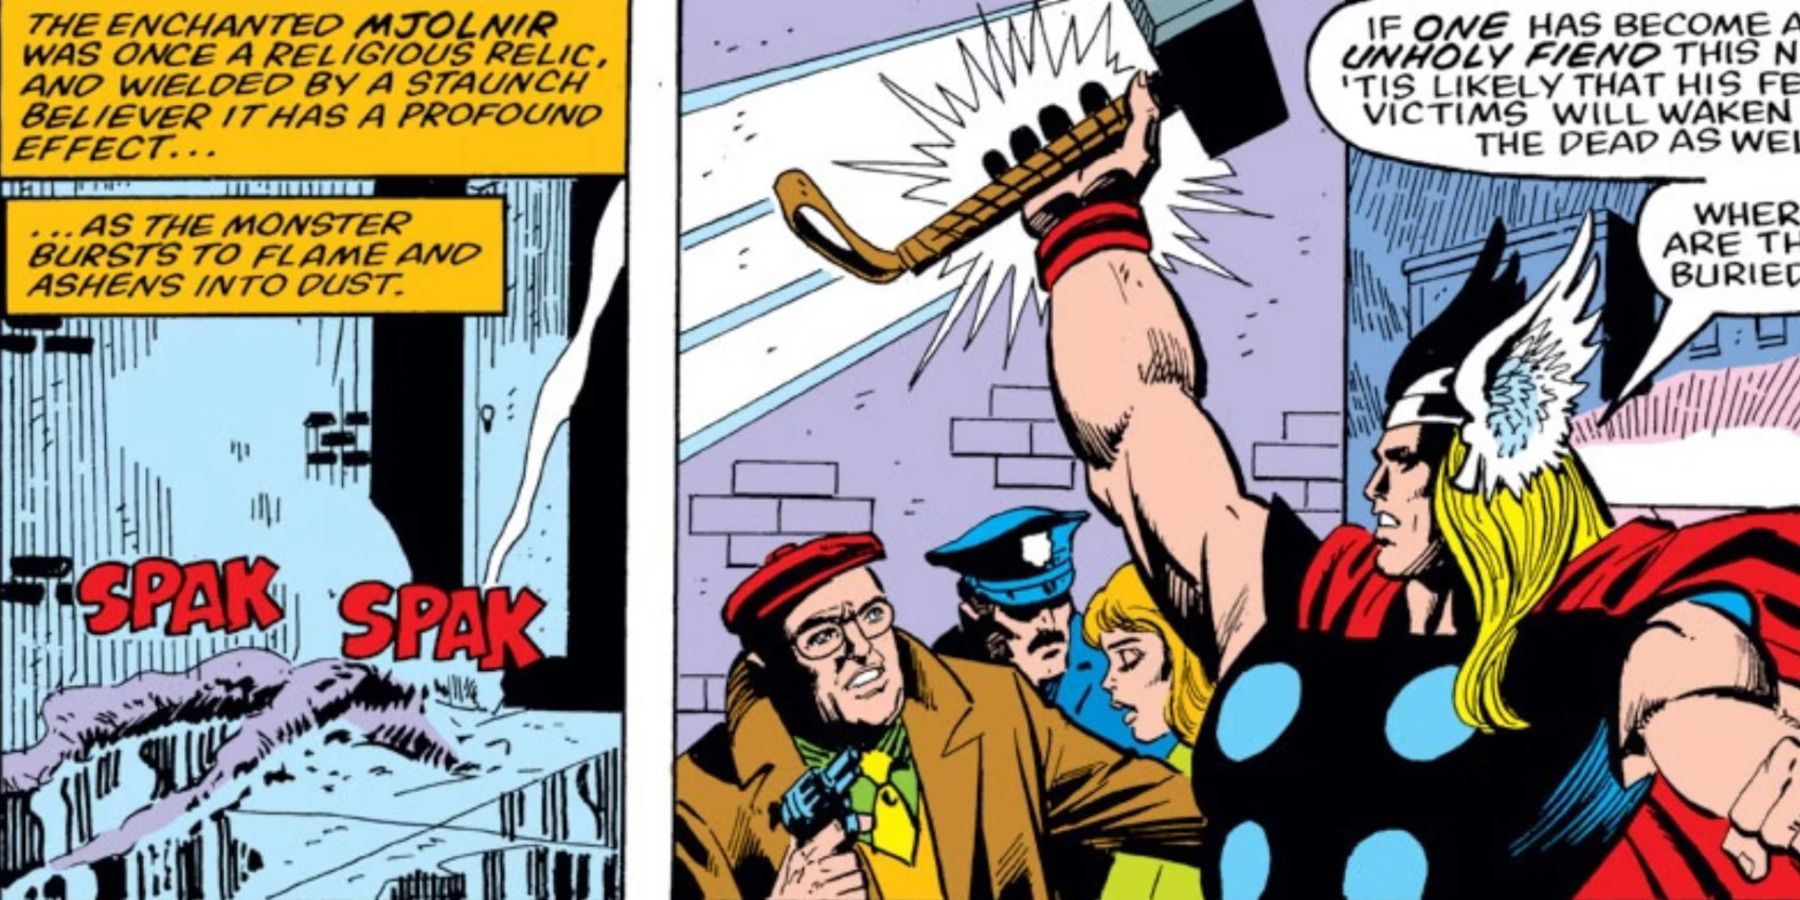 thor using mjolnir against a vampire in the comics